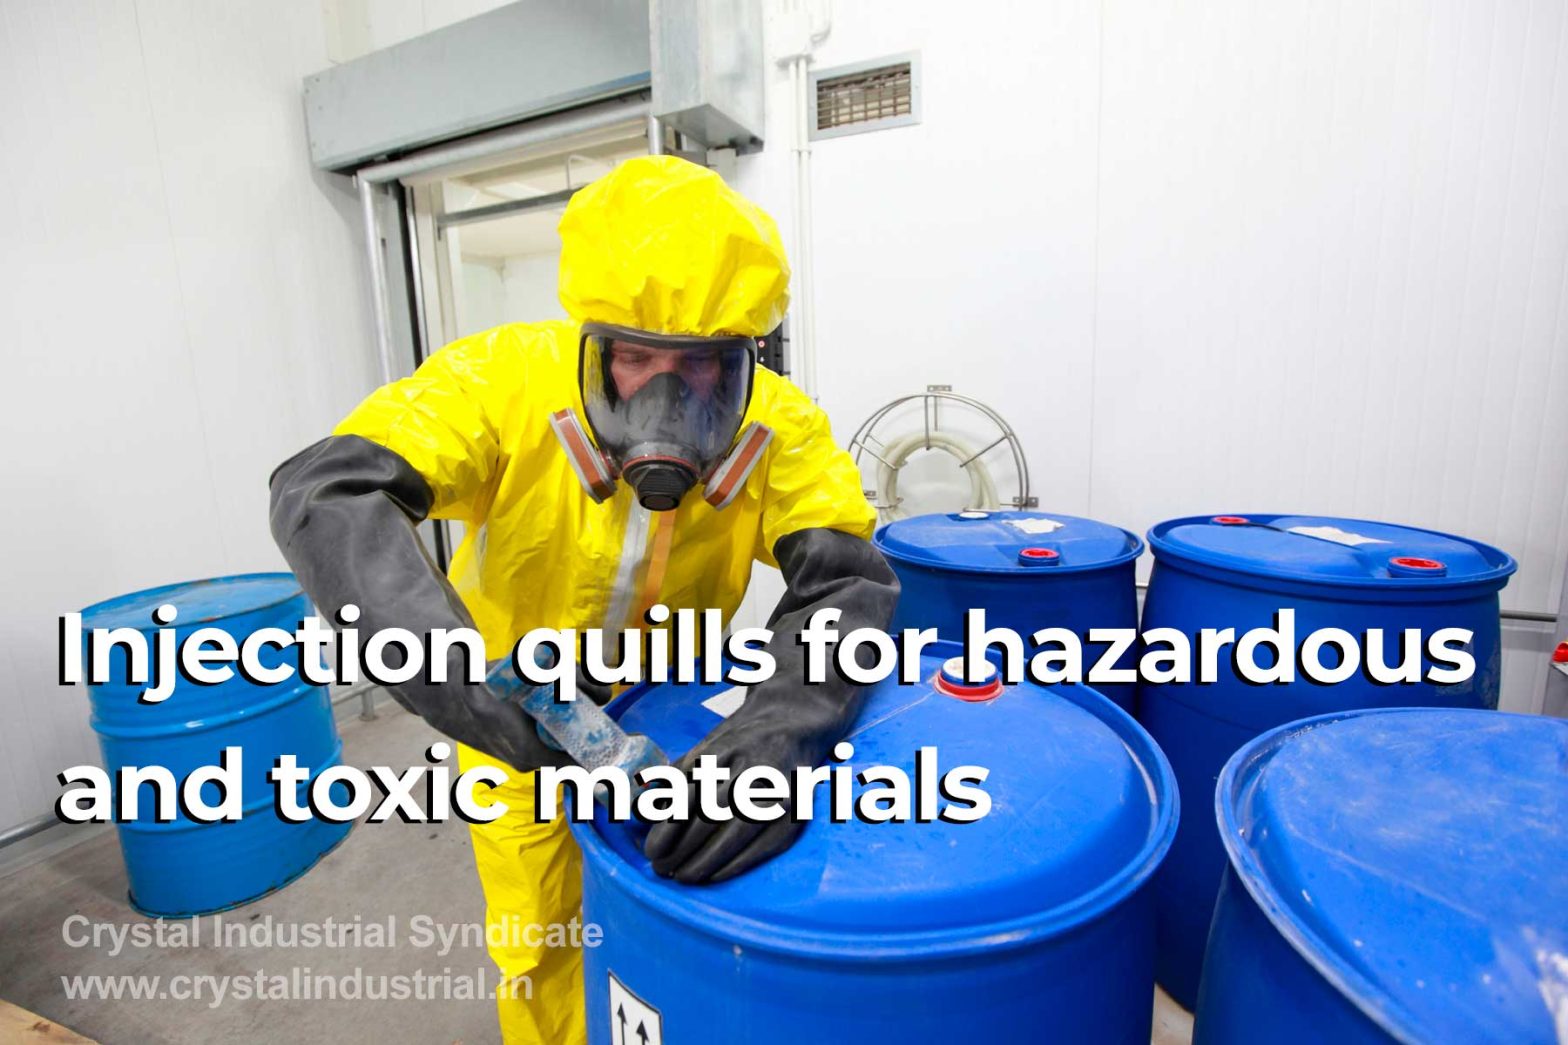 Injection quills for hazardous materials